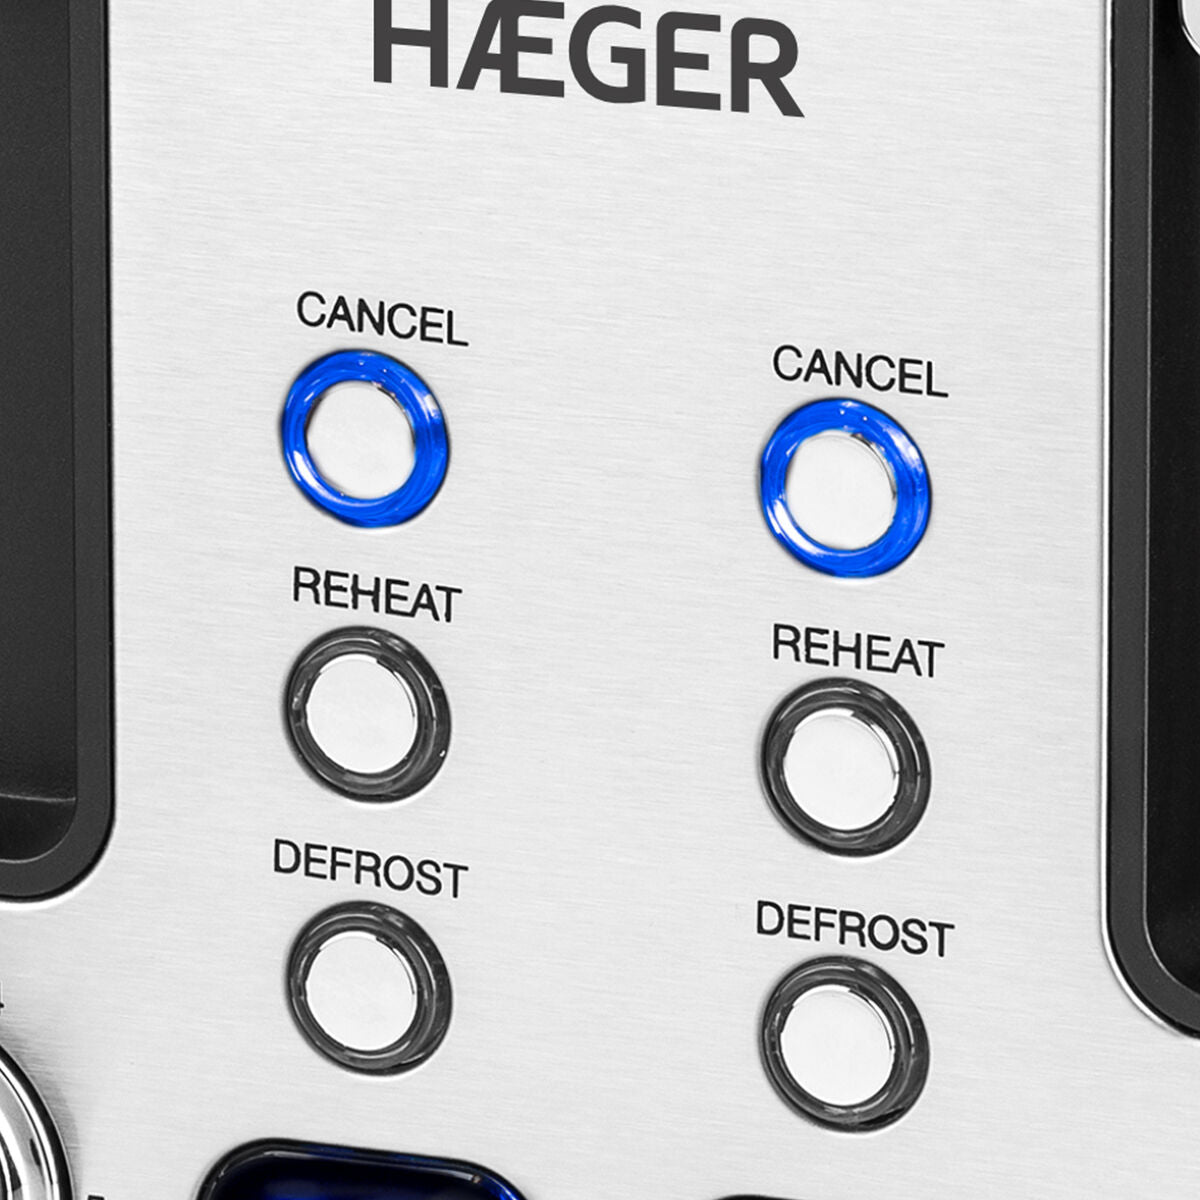 Kaufe Toaster Haeger TO-17D.015A 1750 W bei AWK Flagship um € 65.00